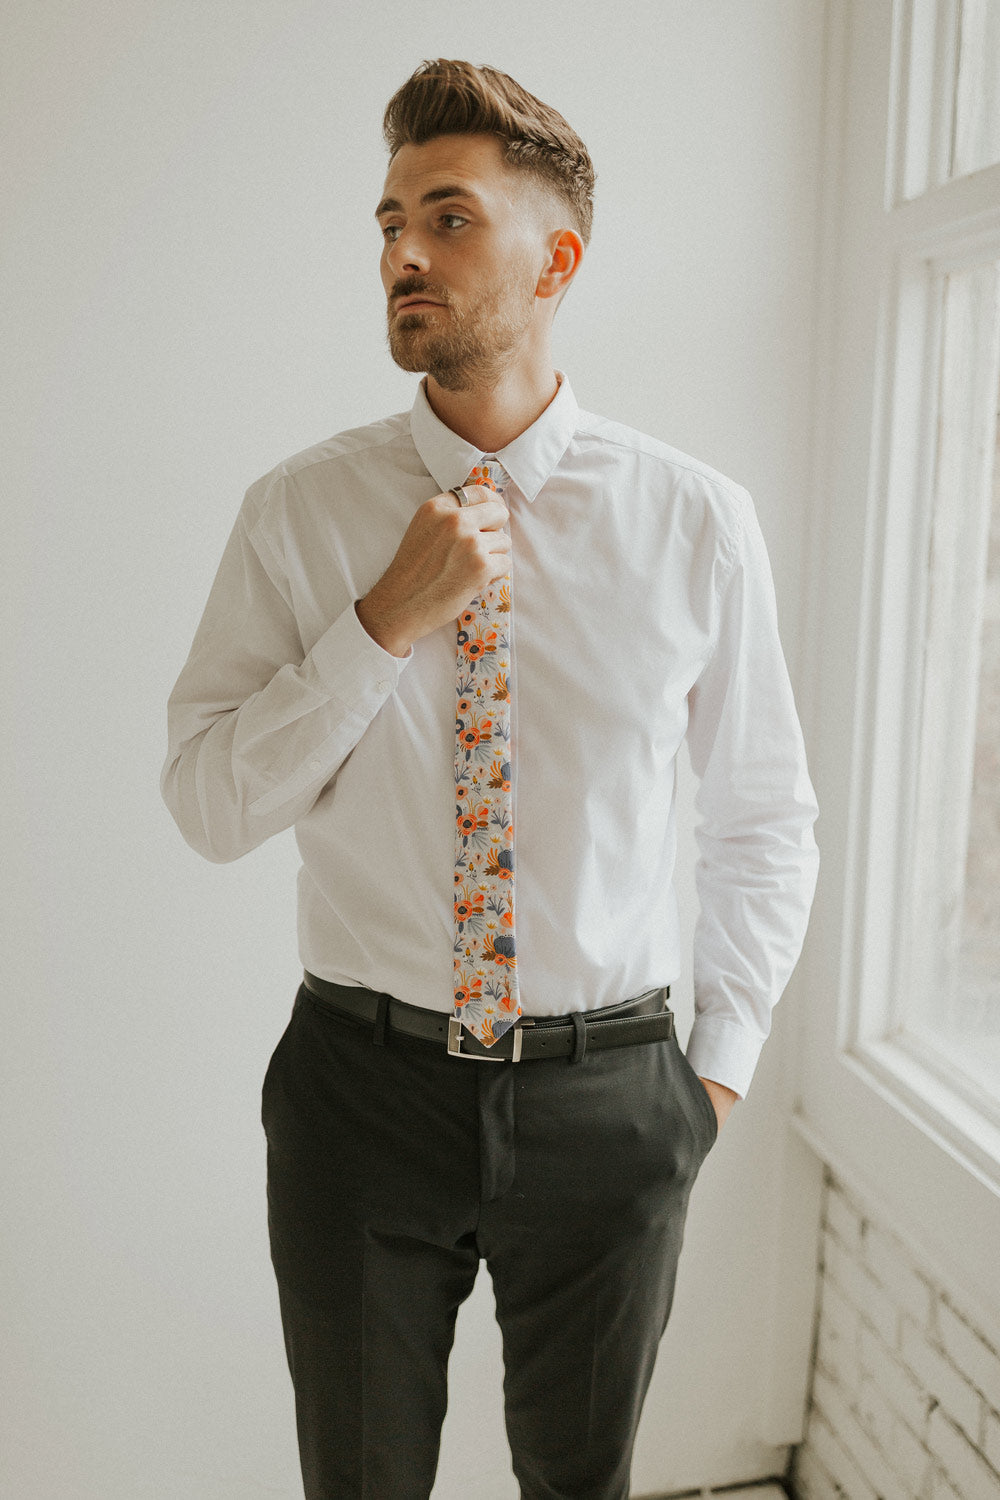 Desert Poppy tie worn with a white shirt, black belt and black pants.